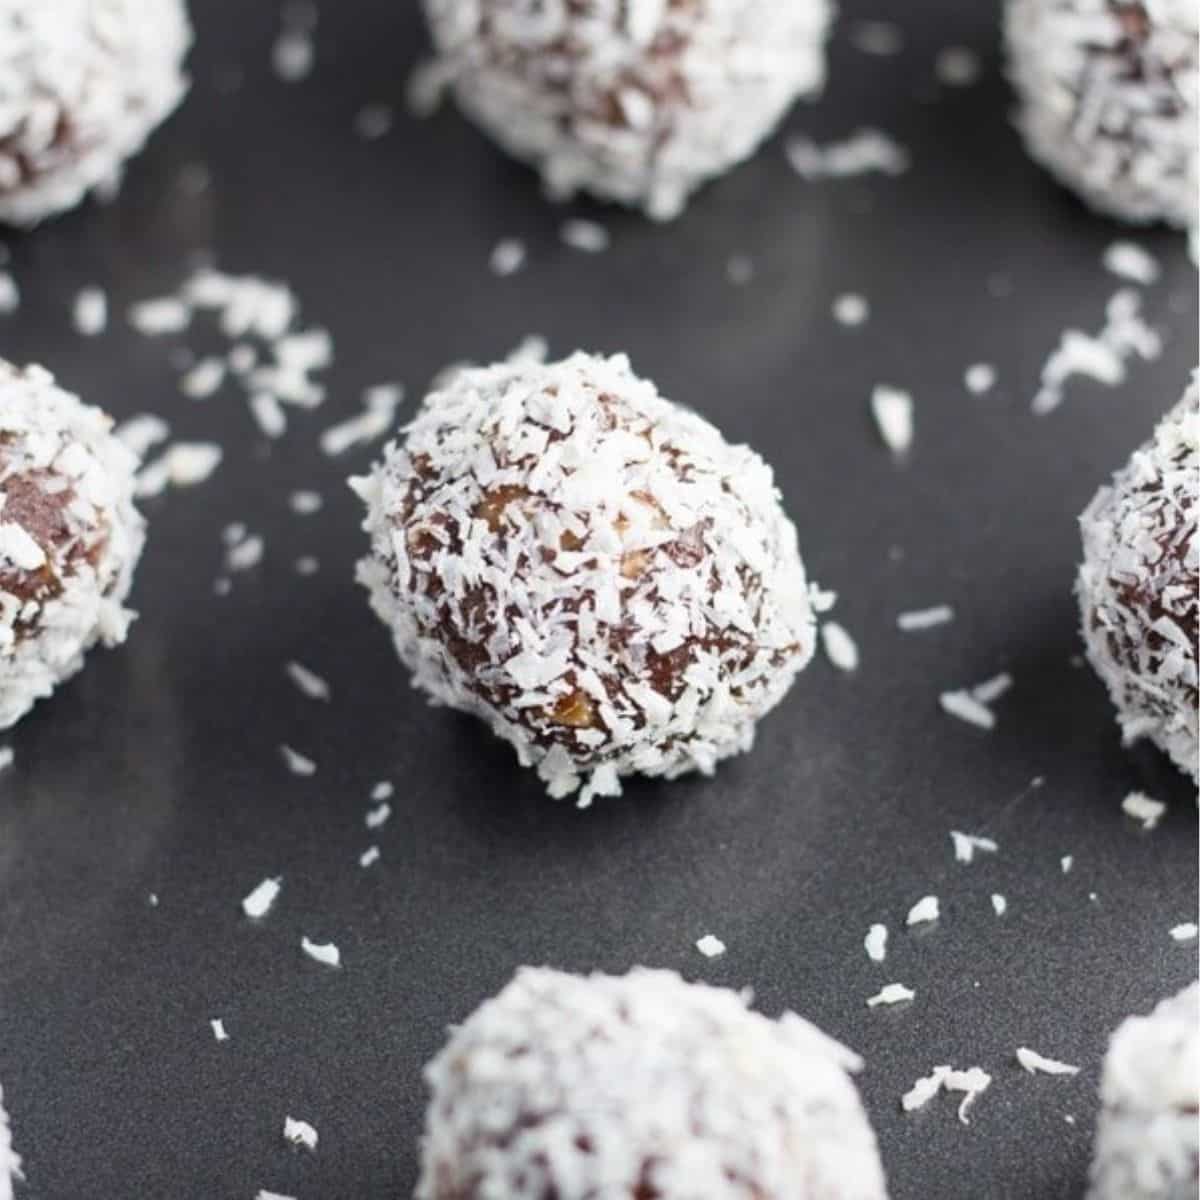 Chocolate Peppermint Balls